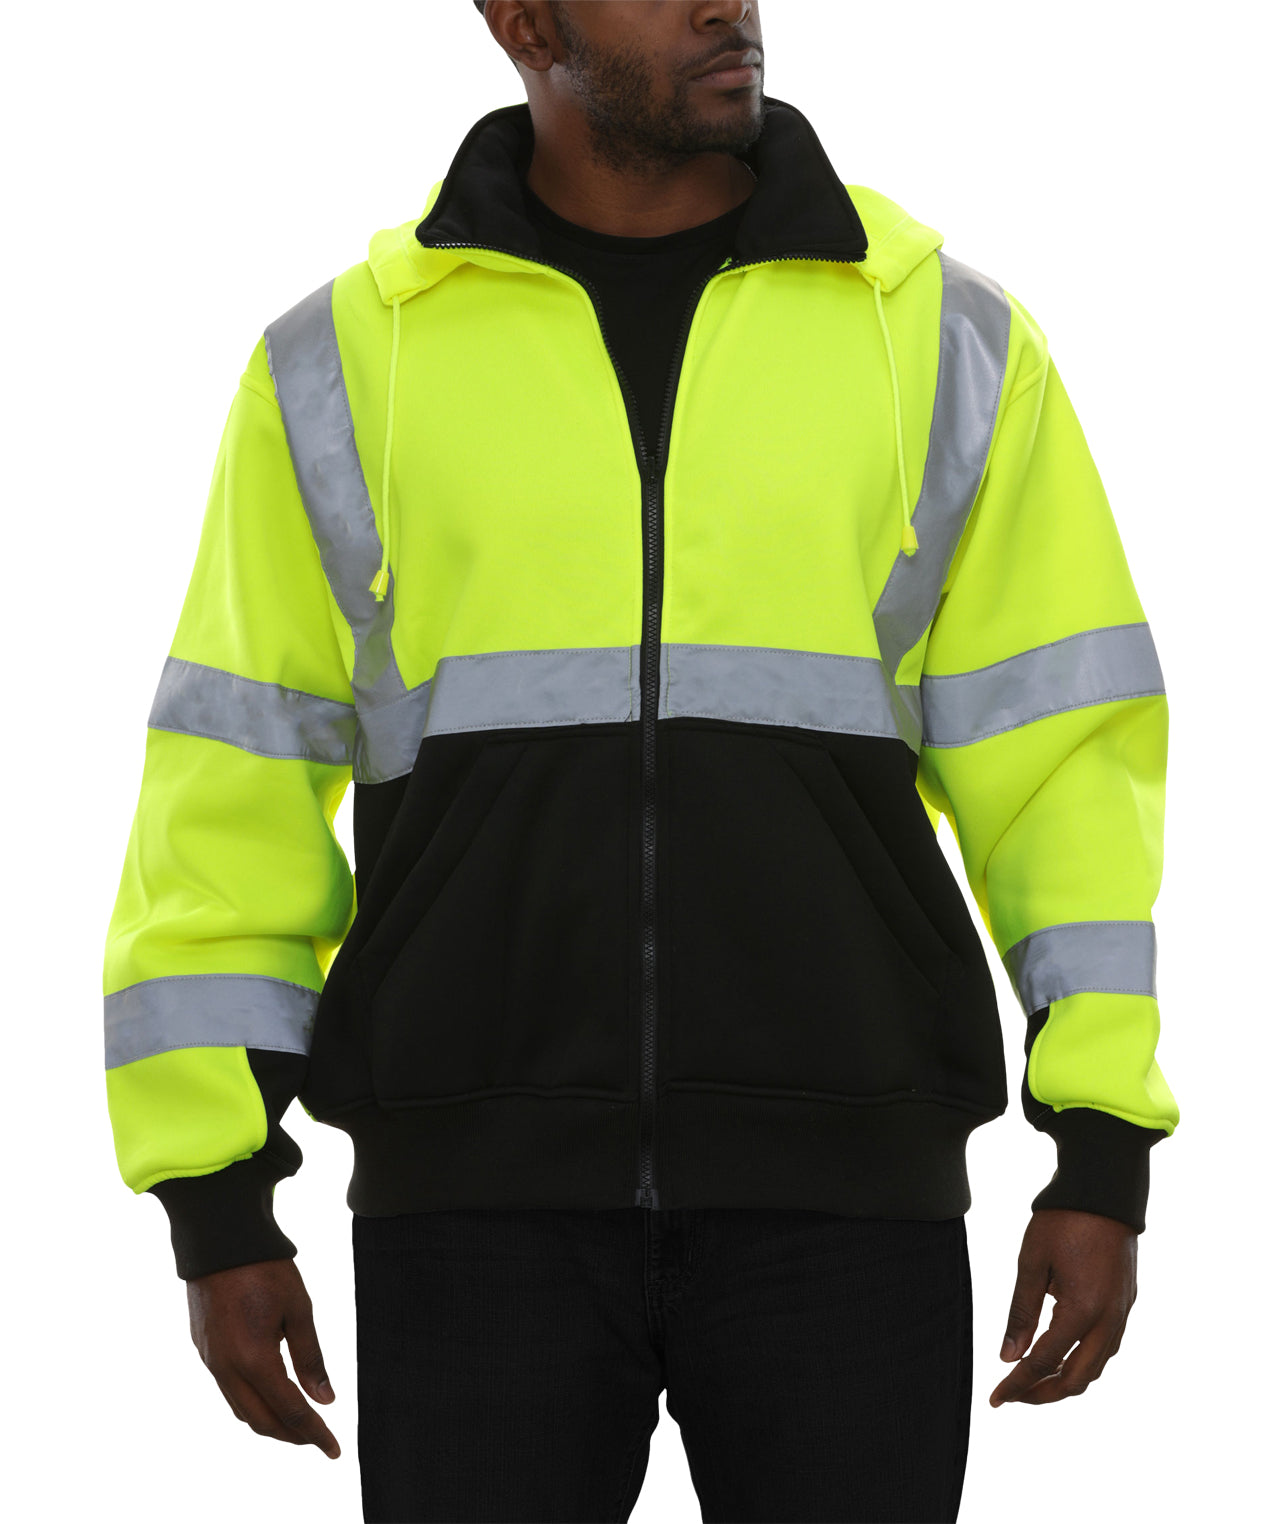 Uomo Hi Viz Vis Gilet Ad alta visibilità Gilet Sicurezza Workwear Jacket